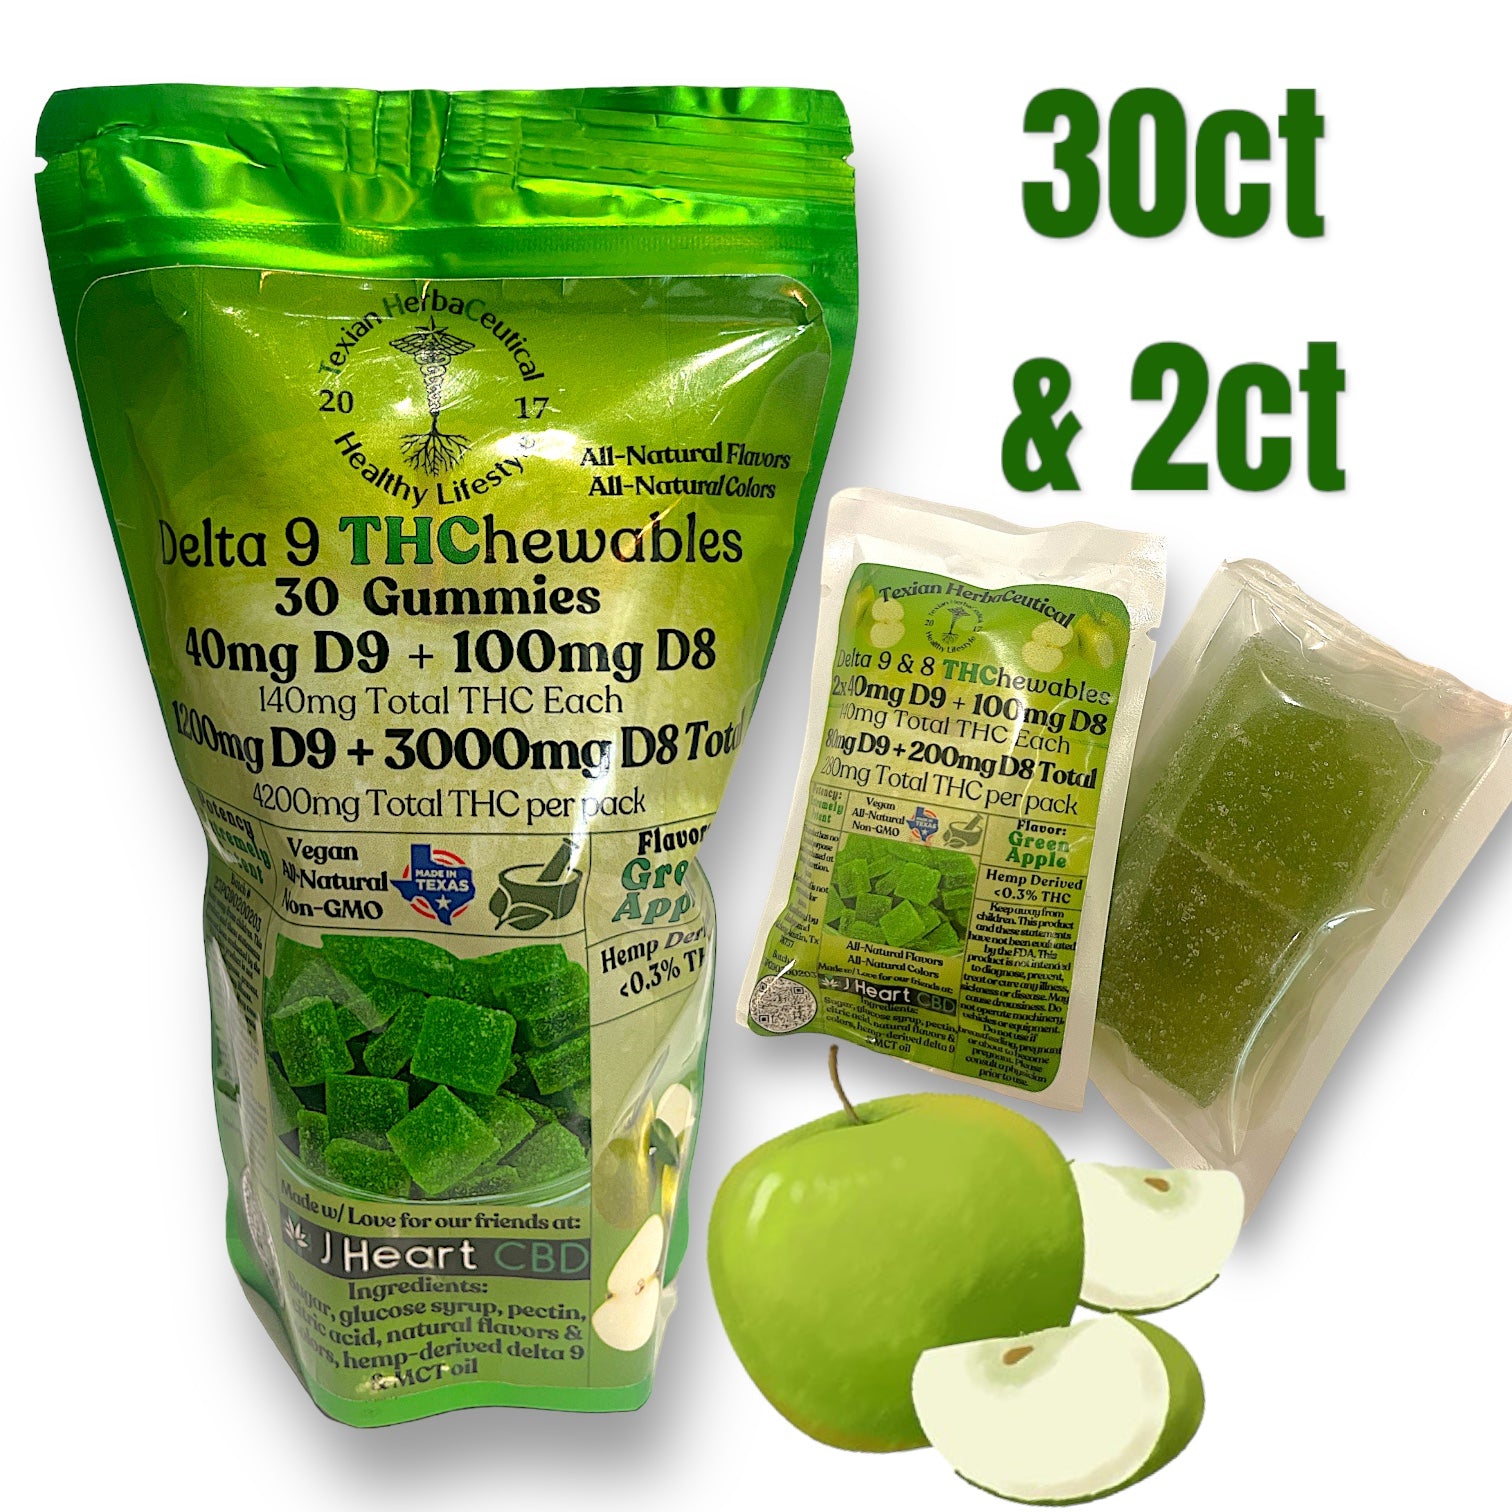 Texian Herbaceutical 40mg Delta 9 THC ( + 100mg Delta 8 THC) Green Apple Gummies - 2ct & 30ct HIGH POTENCY